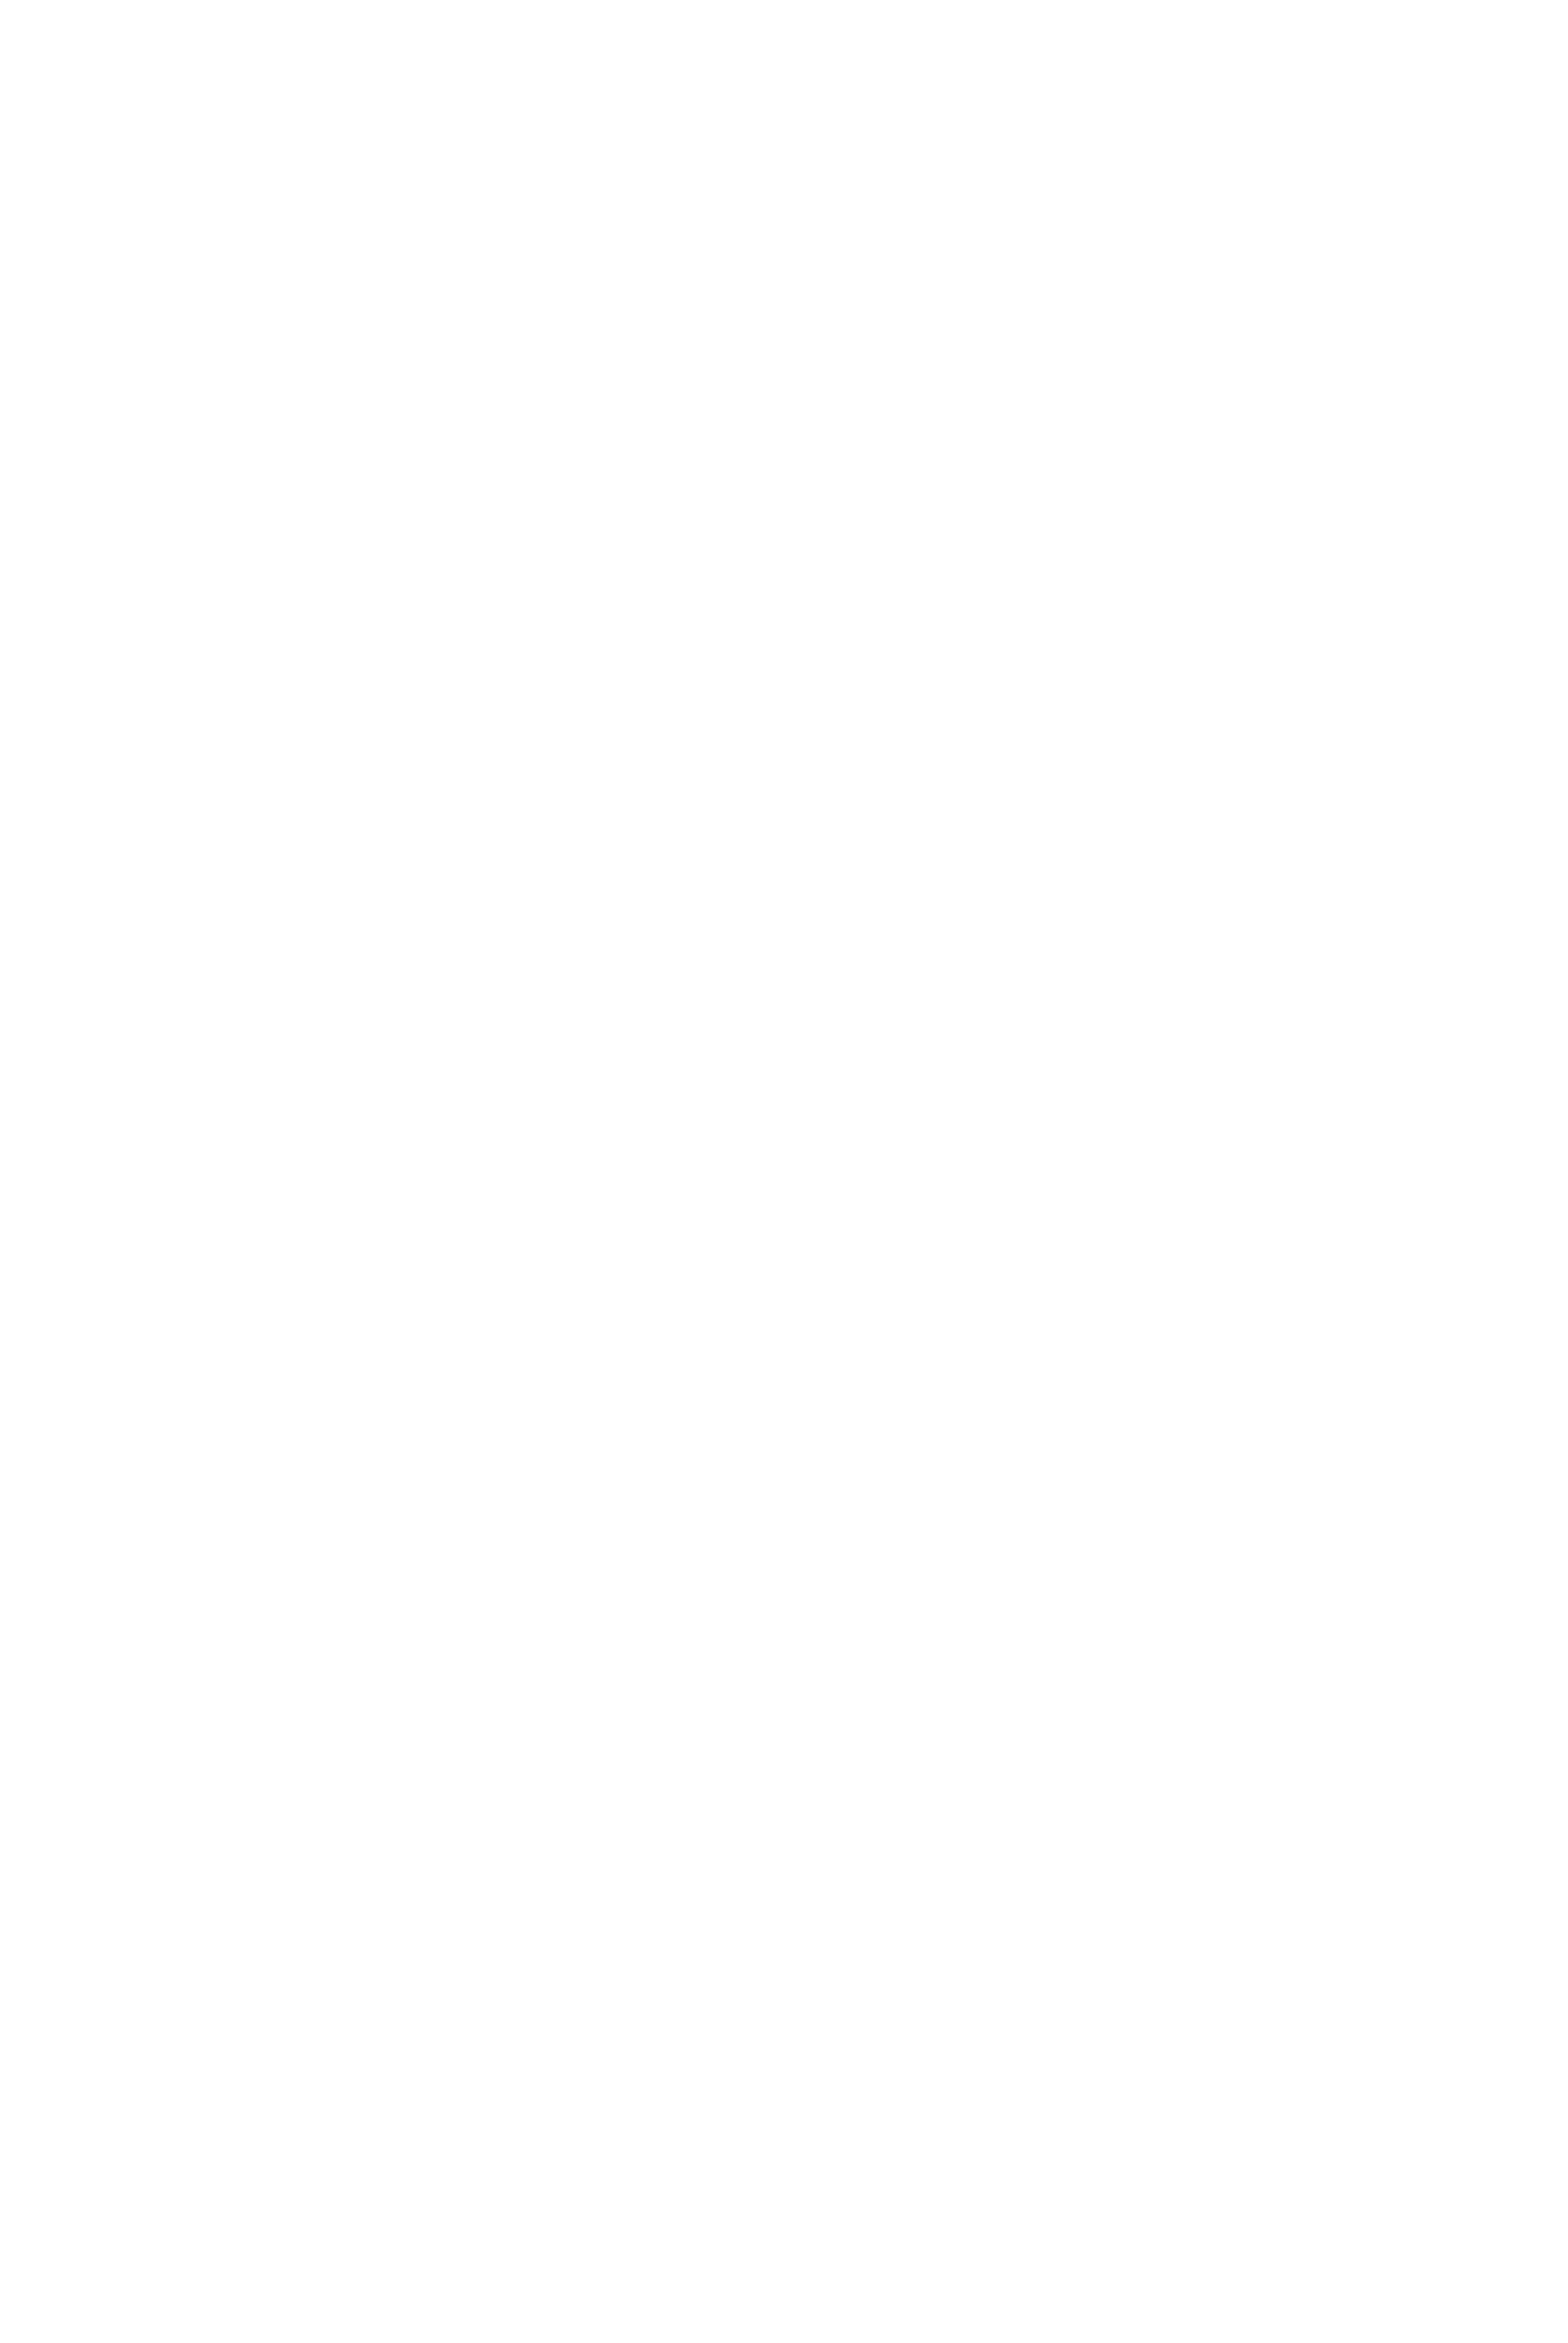 Palangos kultūros centras